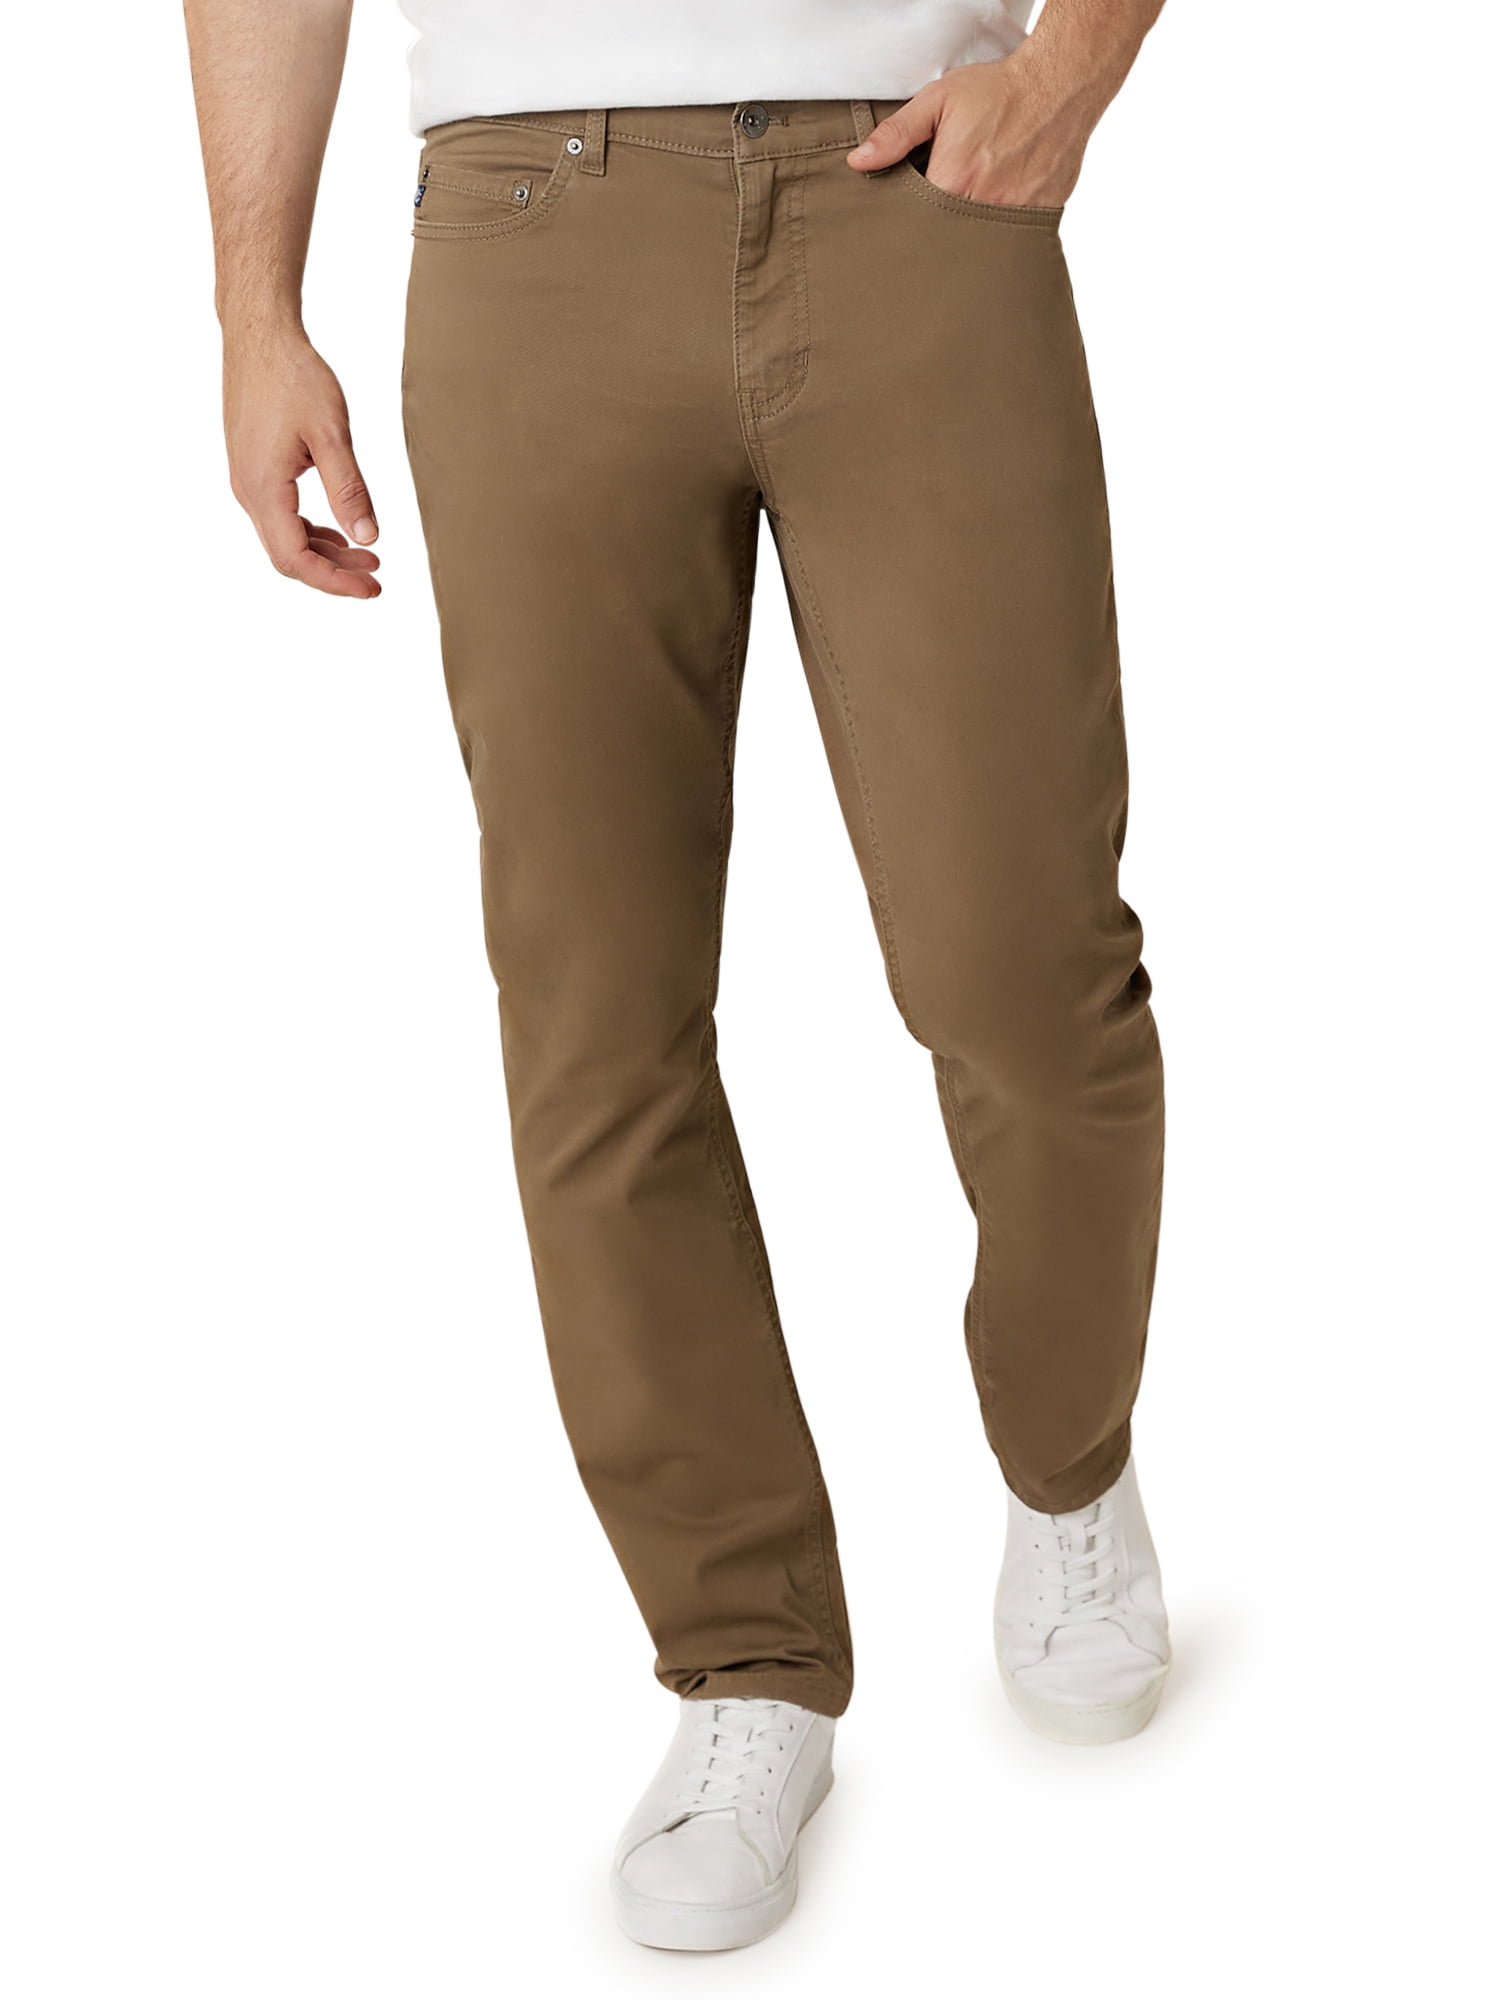 Chaps Men's 5-Pocket Stretch Twill Slim Straight Coastland Wash Chino Pant w/ Flex Waistband (Deep Khaki) $12.71 + Free S&H w/ Walmart+ or $35+